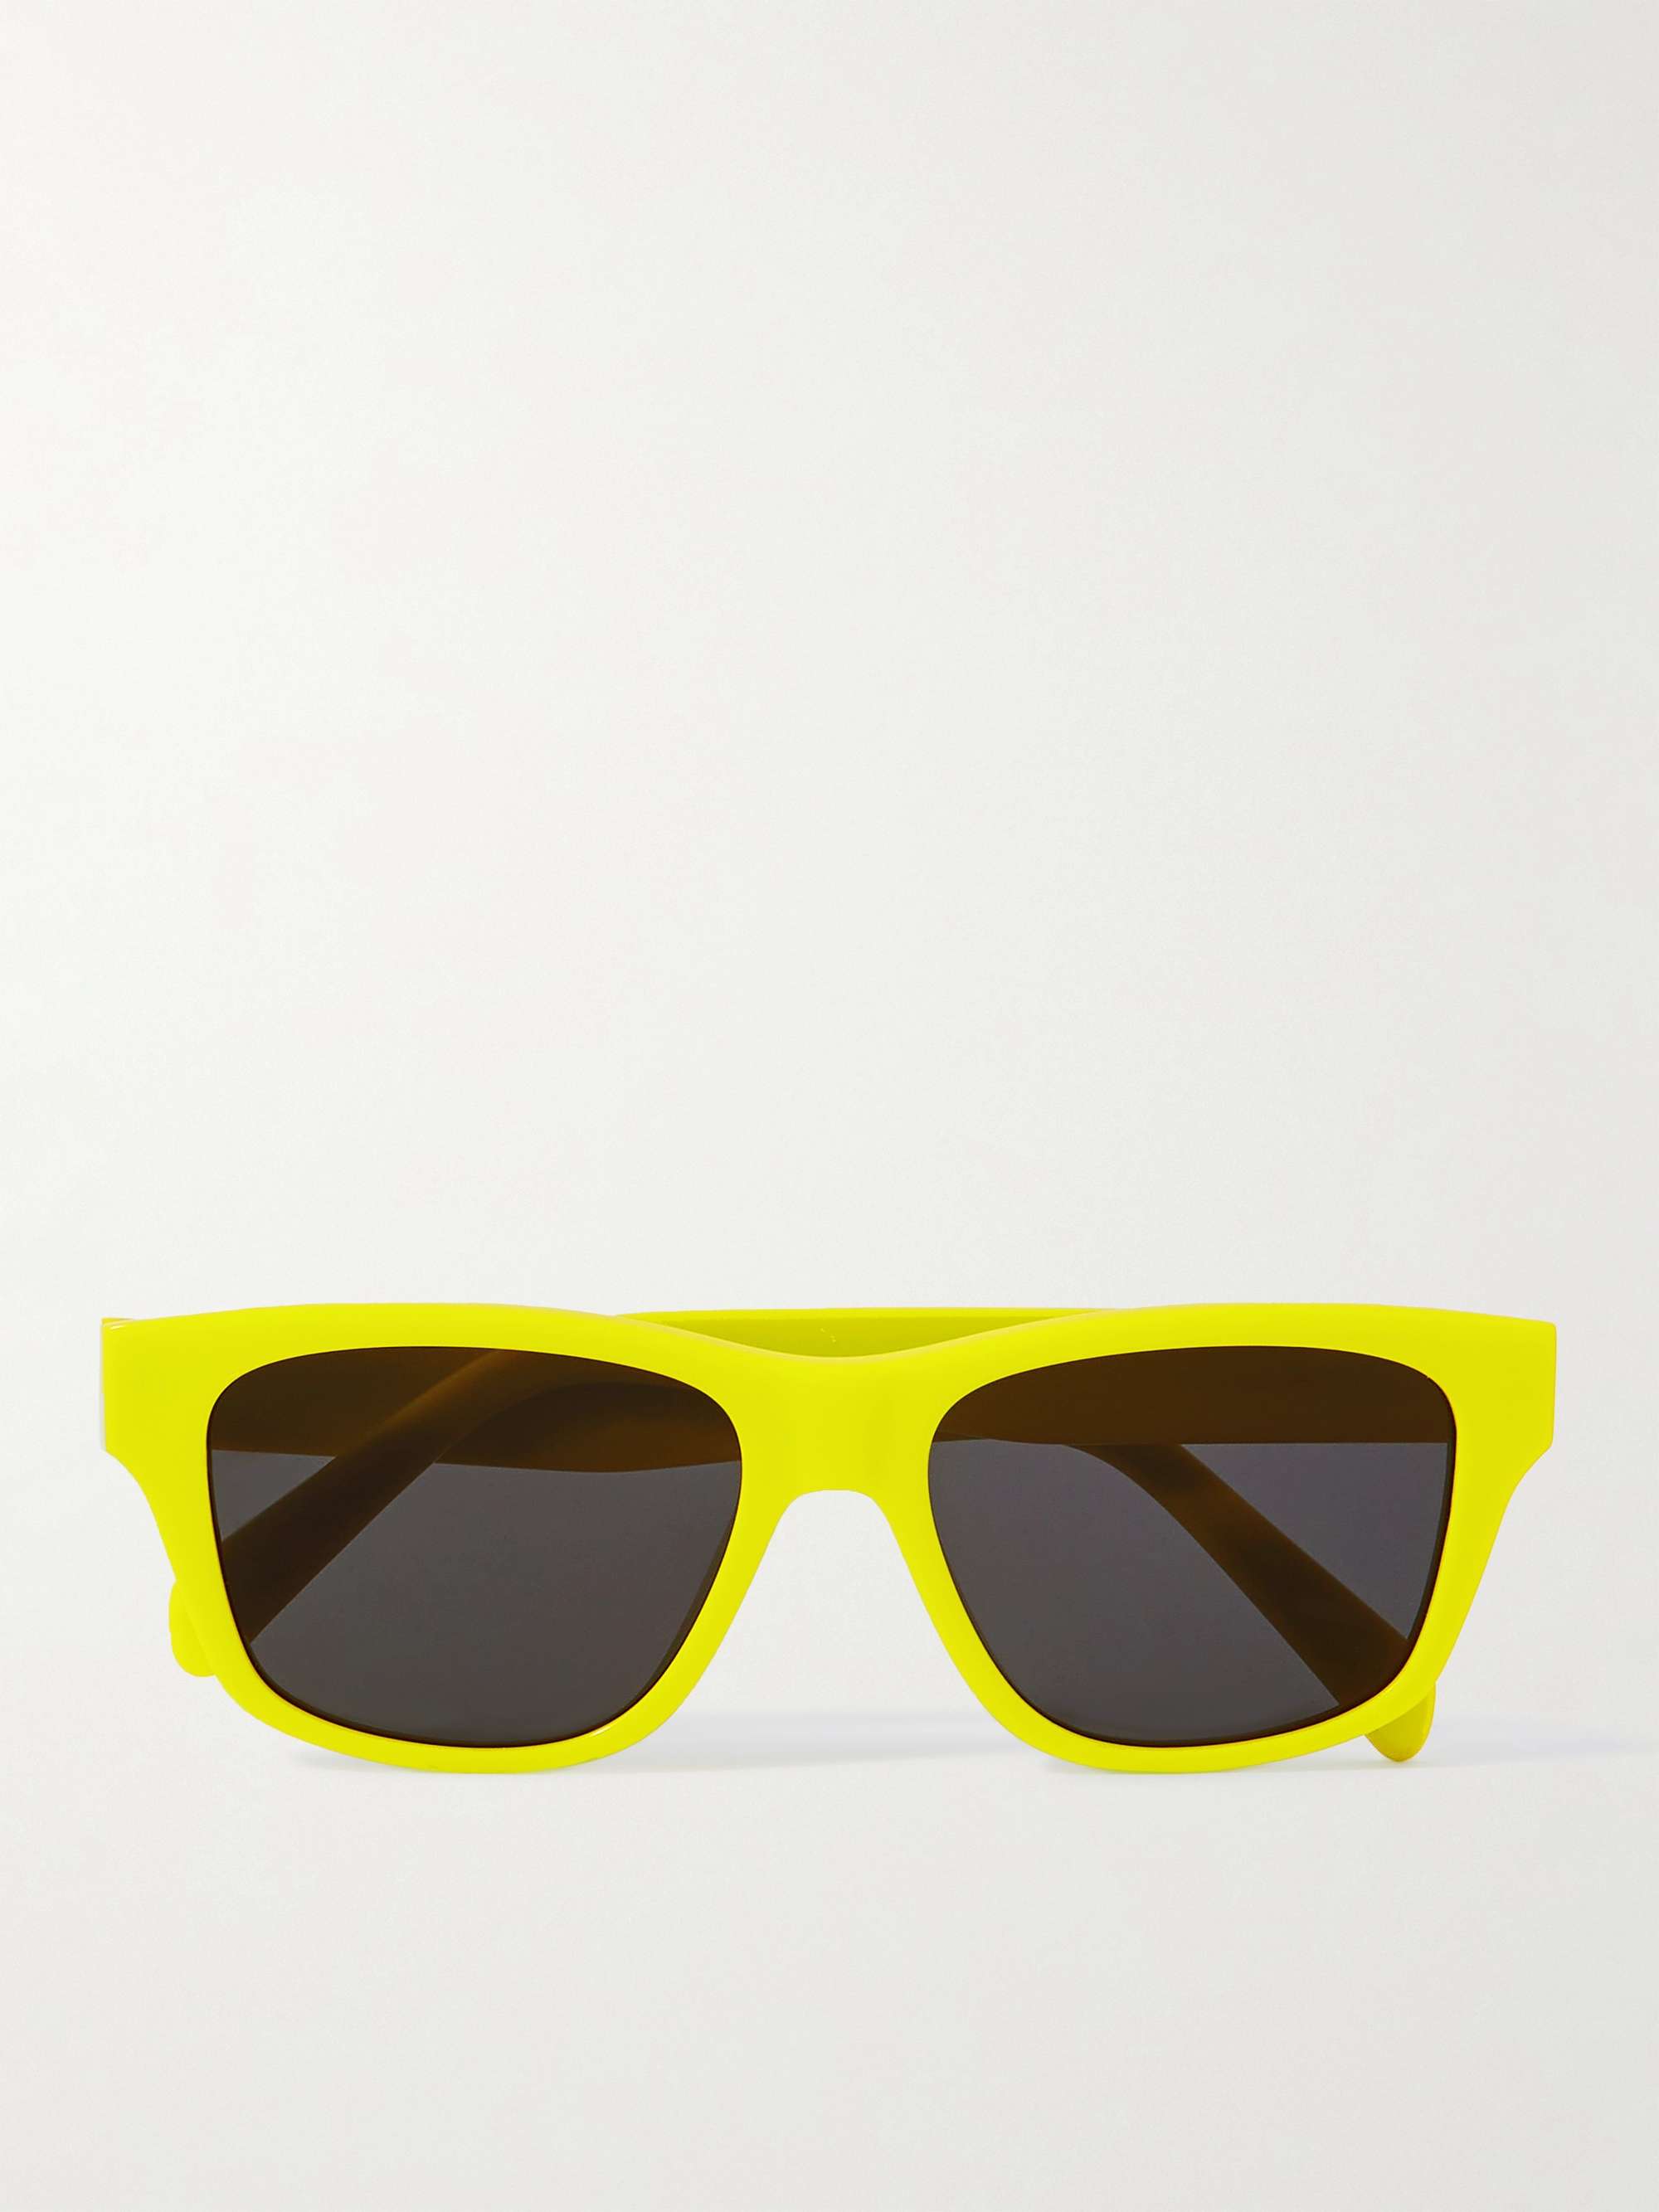 CELINE HOMME D-Frame Acetate Sunglasses